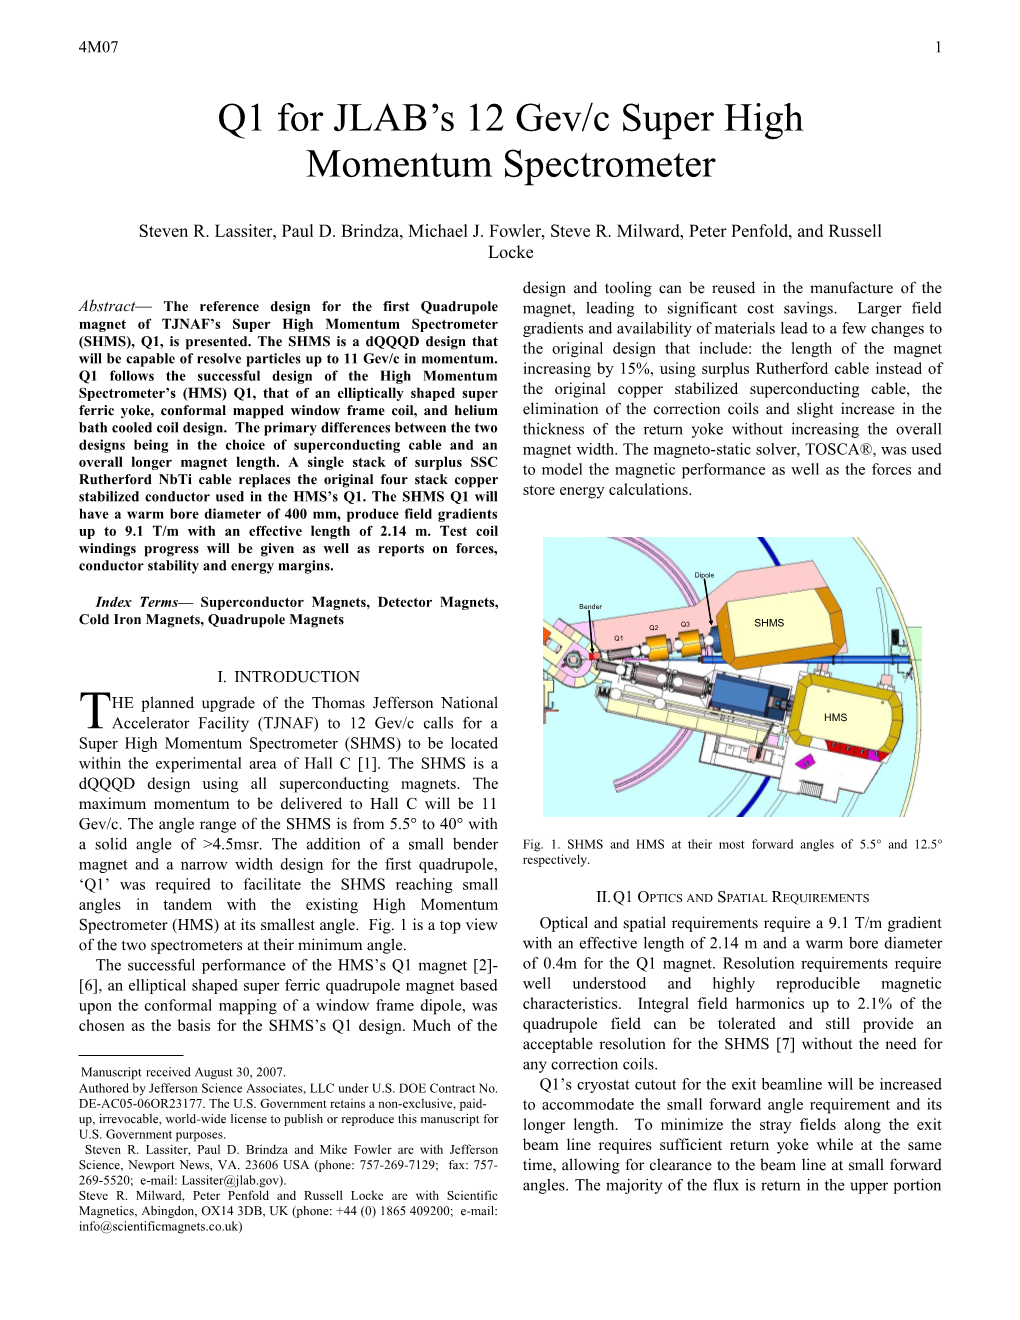 Q1 for JLAB S 12 Gev/C Super High Momentum Spectrometer